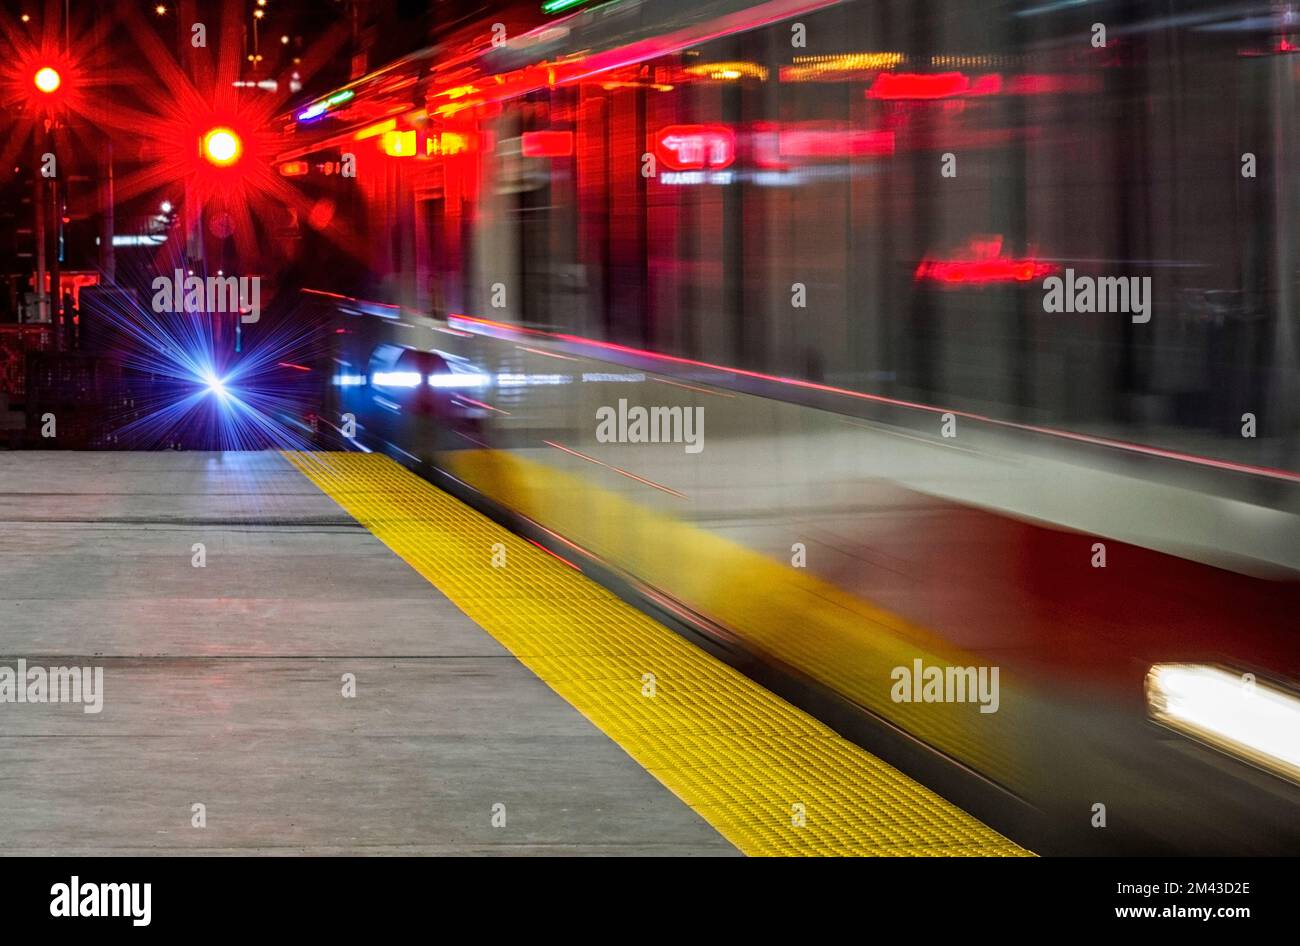 Light Rail Transit (LRT) car pulling into station platform Stock Photo